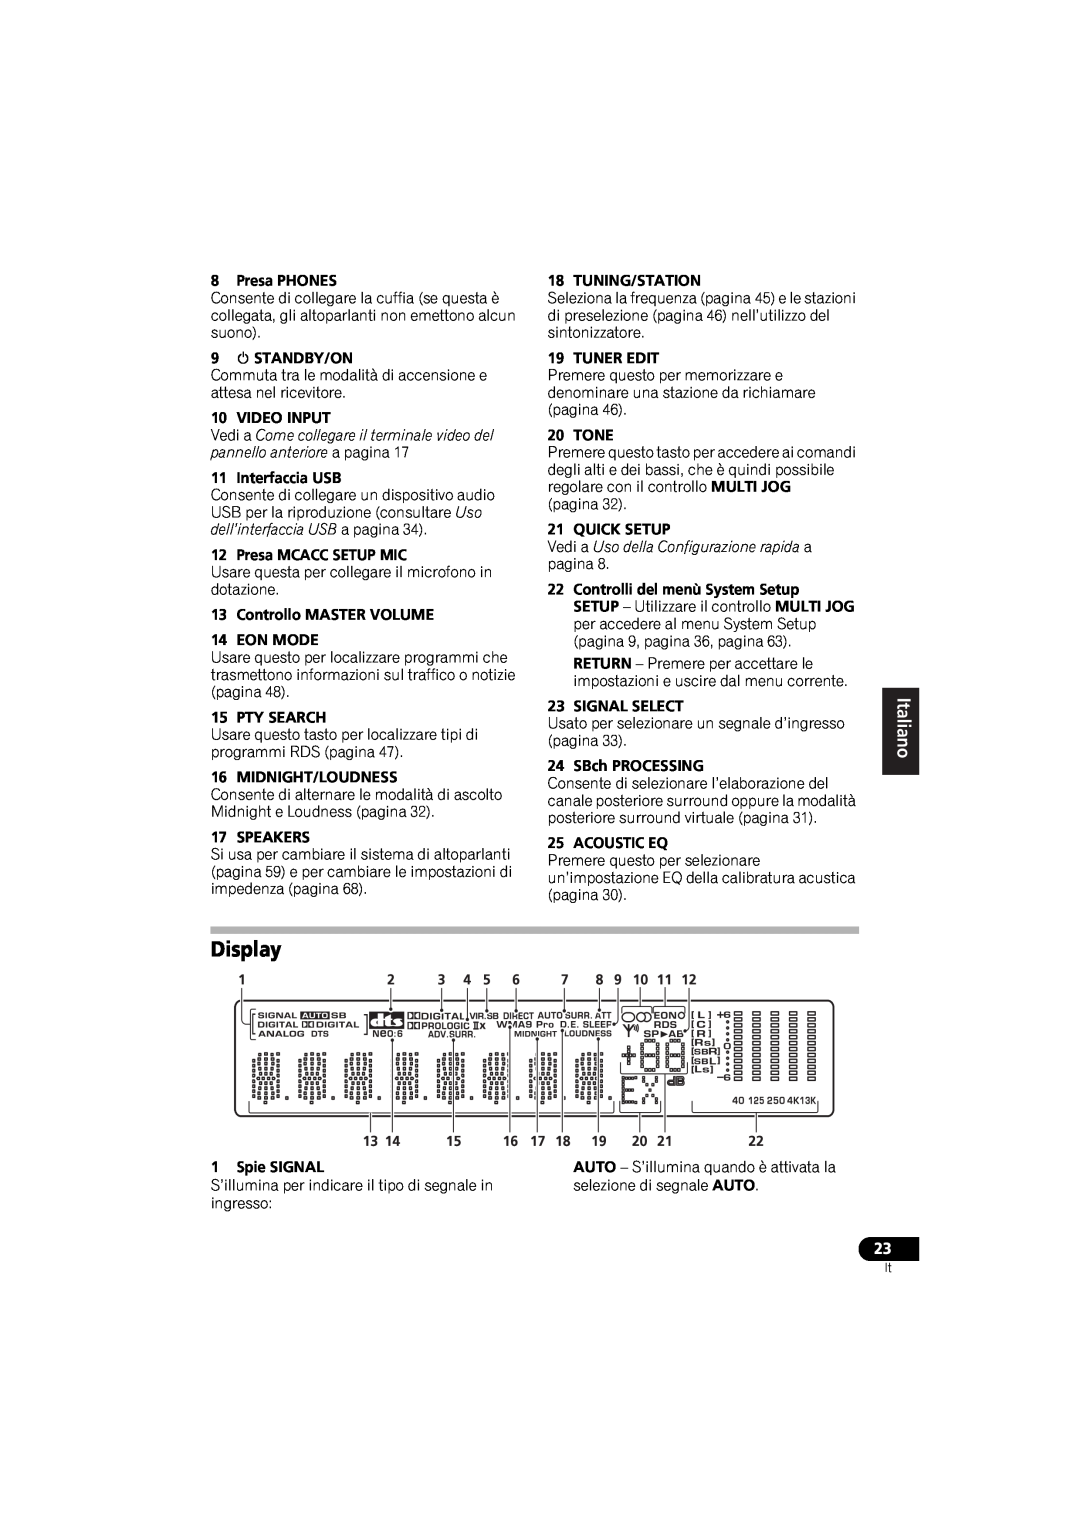 Pioneer VSX-916-K, VSX-916-S operating instructions Vedi a Uso della Configurazione rapida a pagina, Display, Presa PHONES 